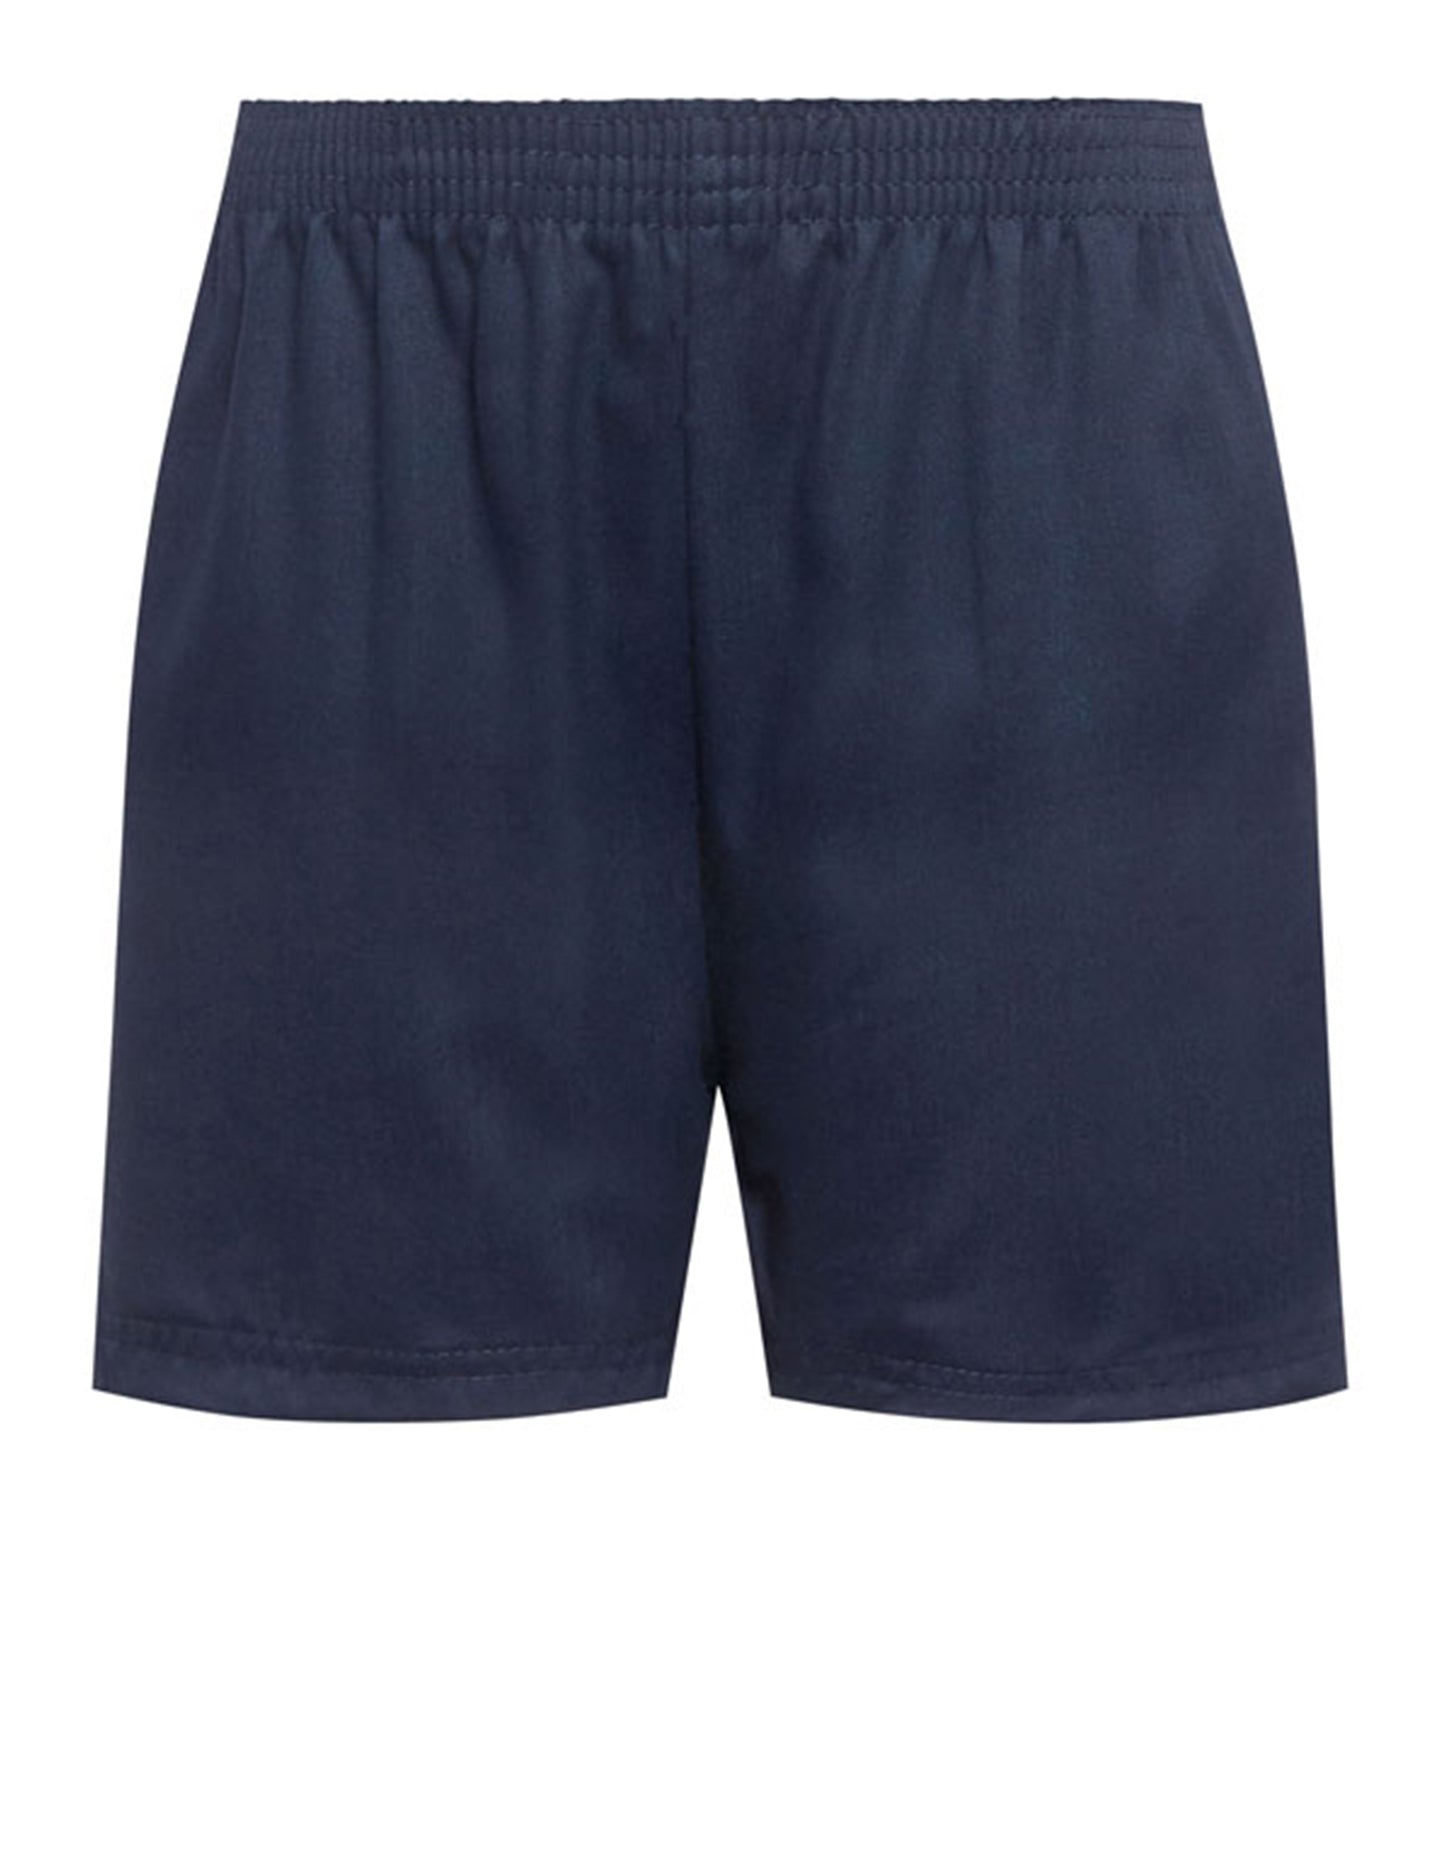 Navy - PE Shorts - School Uniform Shop